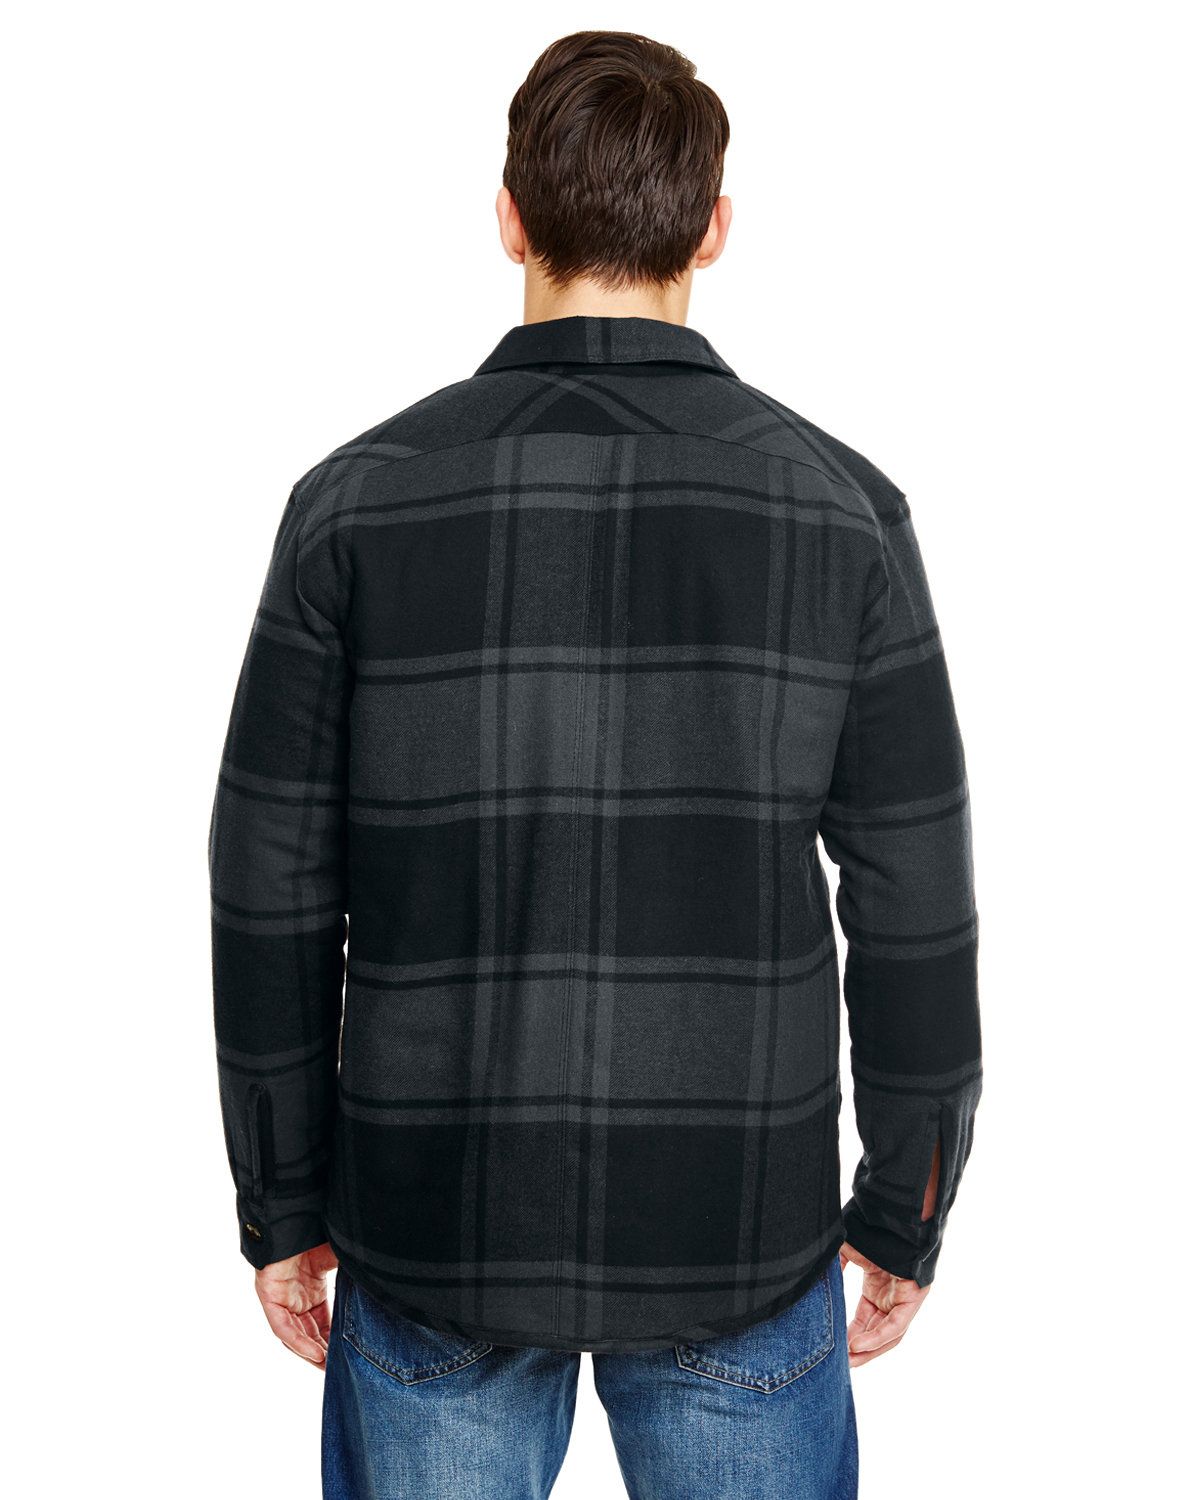 'Burnside B8610 Adult Quilted Flannel Jacket'